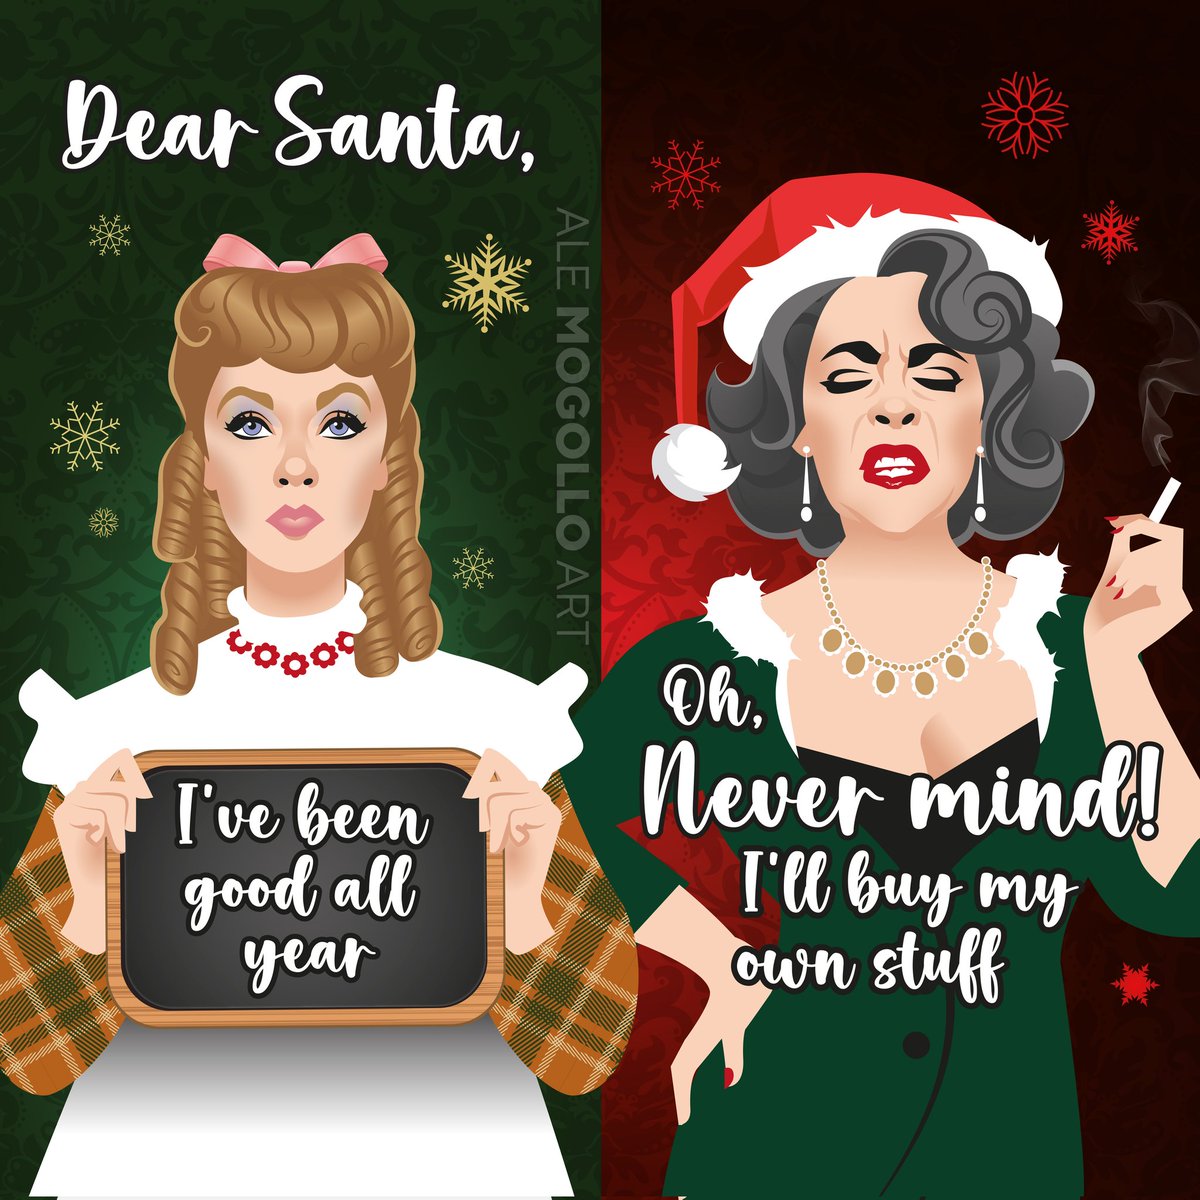 #Mood
Dear Santa, I've been good all year. Oh, never mind! I'll buy my own stuff.
#elizabethtaylor #littlewomen #whosafraidofvirginiawoolf #christmas #santa #dearsanta #alejandromogolloart